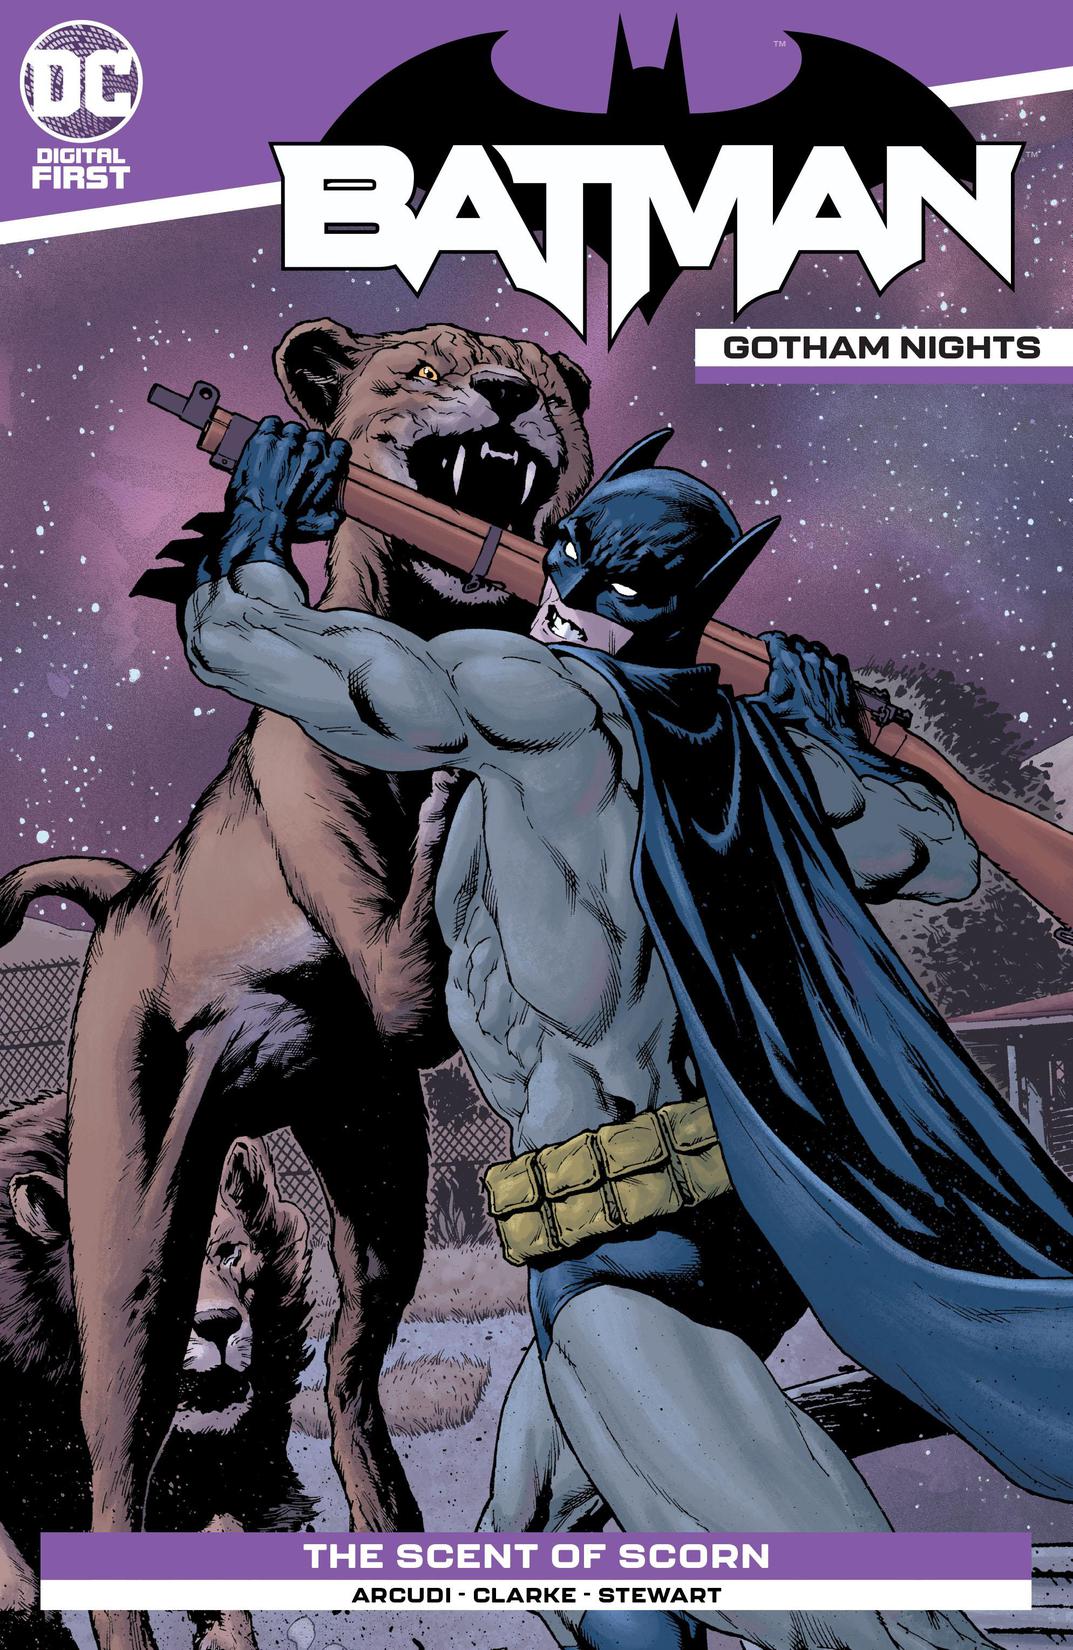 Batman: Gotham Nights #10 preview images